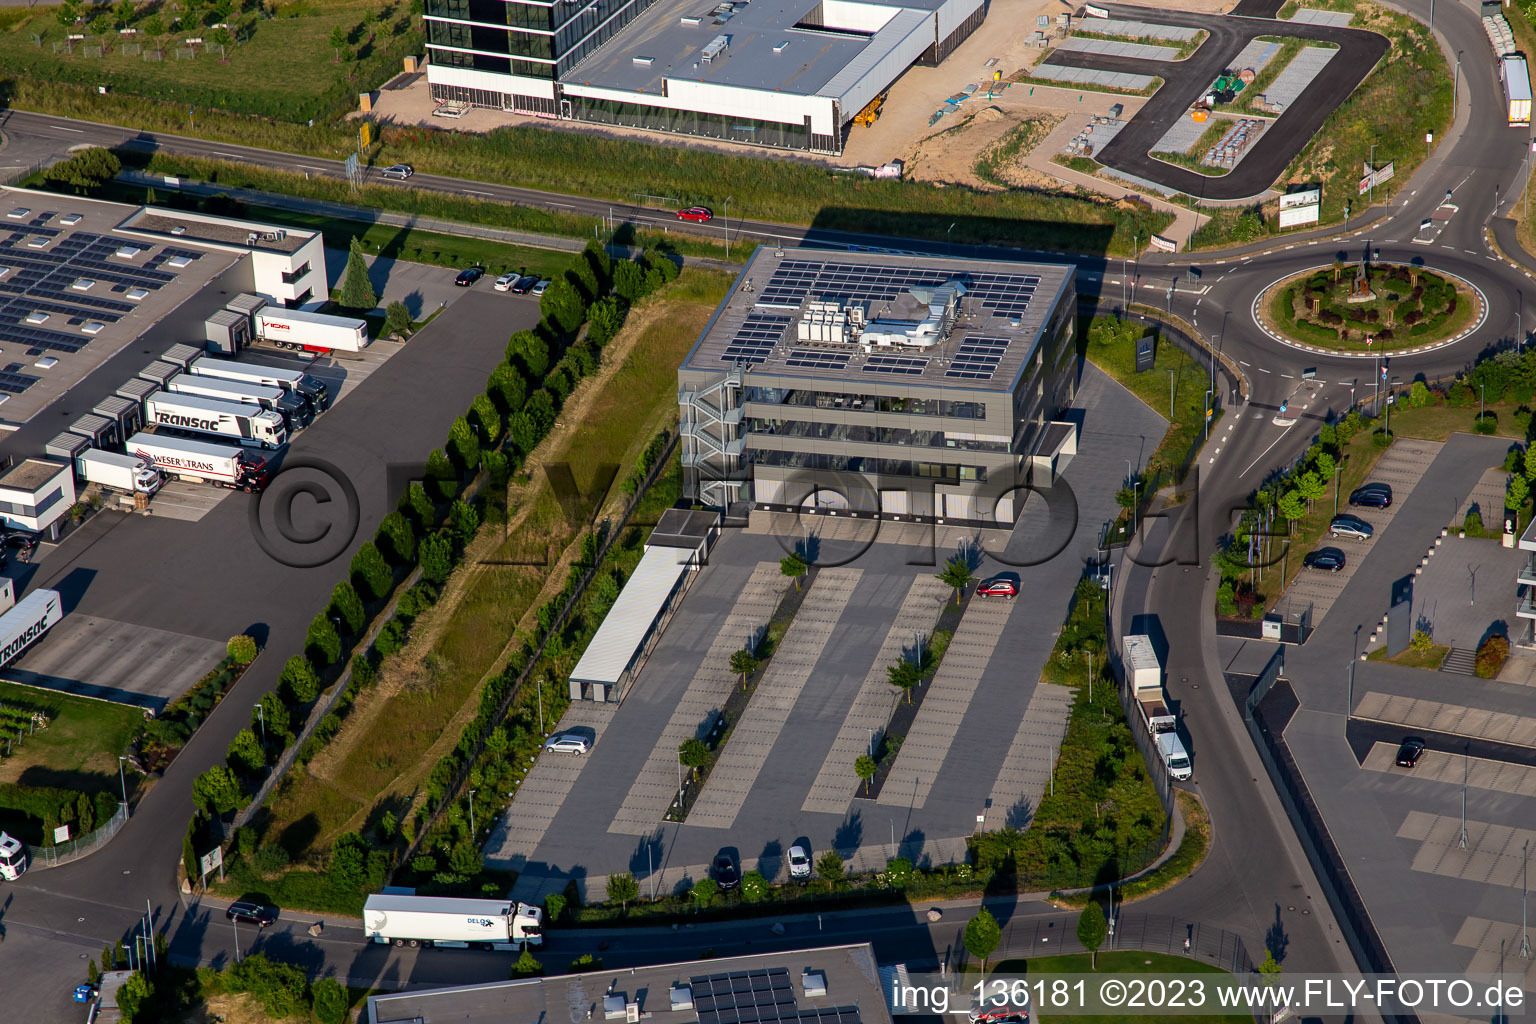 ITK Engineering GmbH in Rülzheim in the state Rhineland-Palatinate, Germany